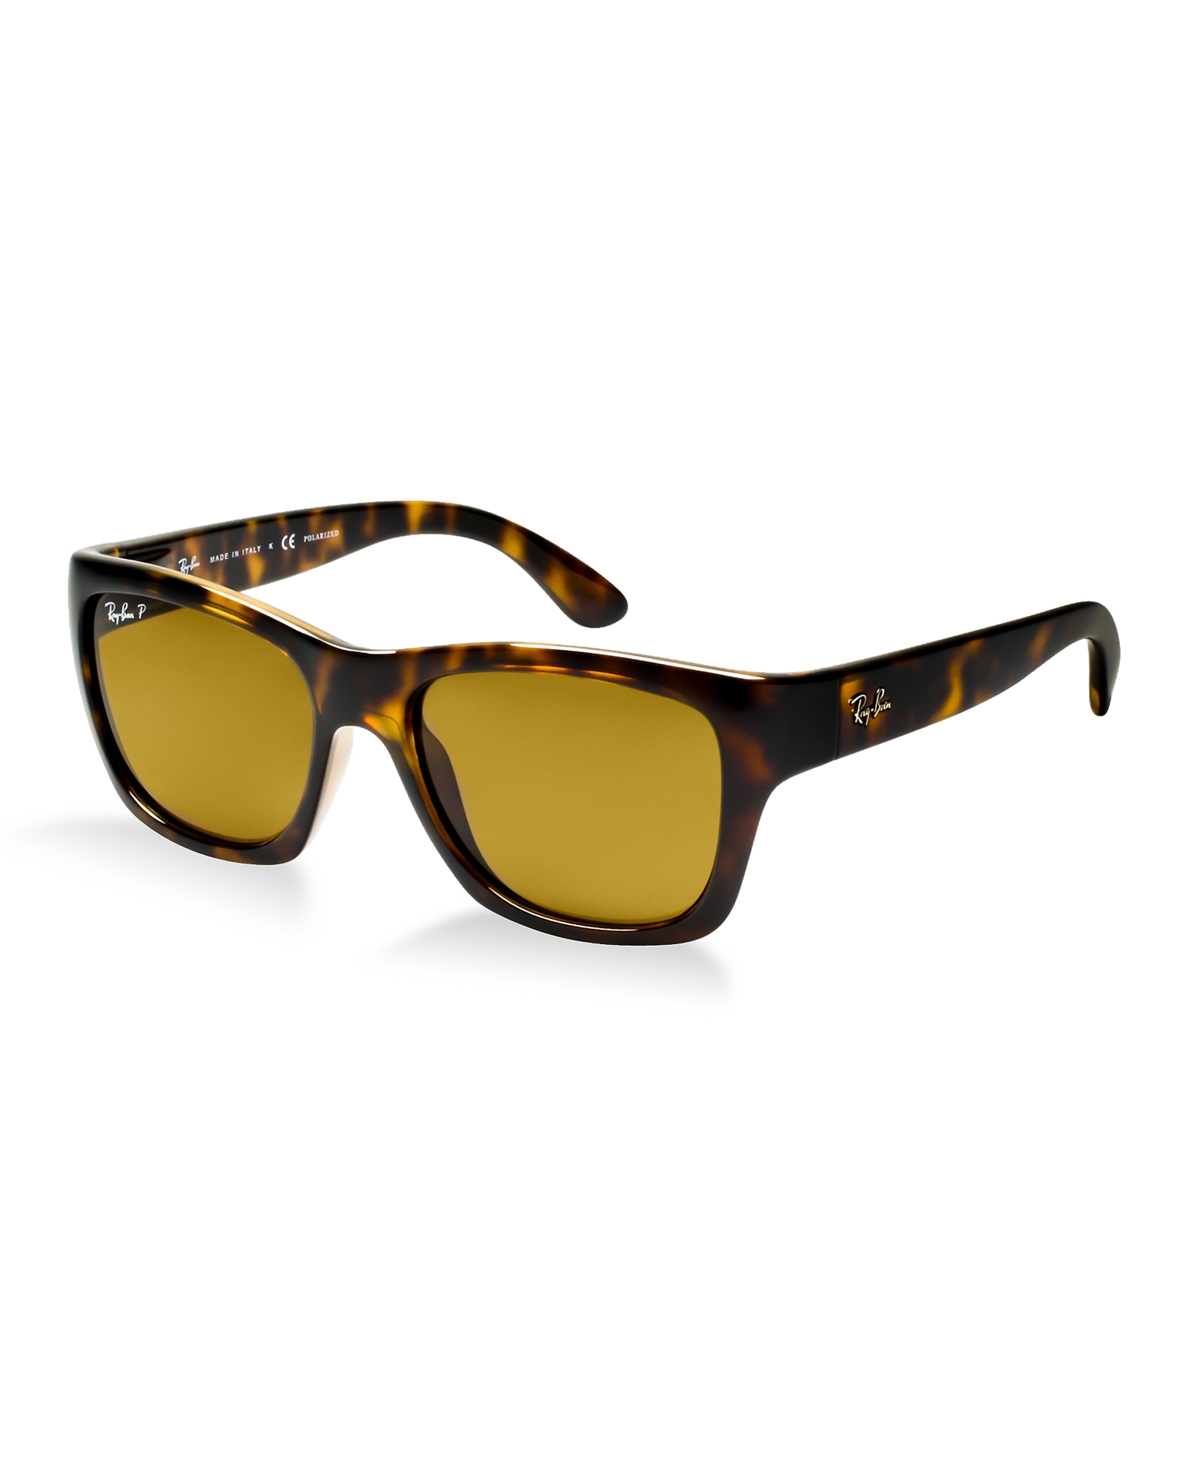 Ray Ban Unisex Polarized Lightweight Sunglasses, Rb4194 In Light Havana